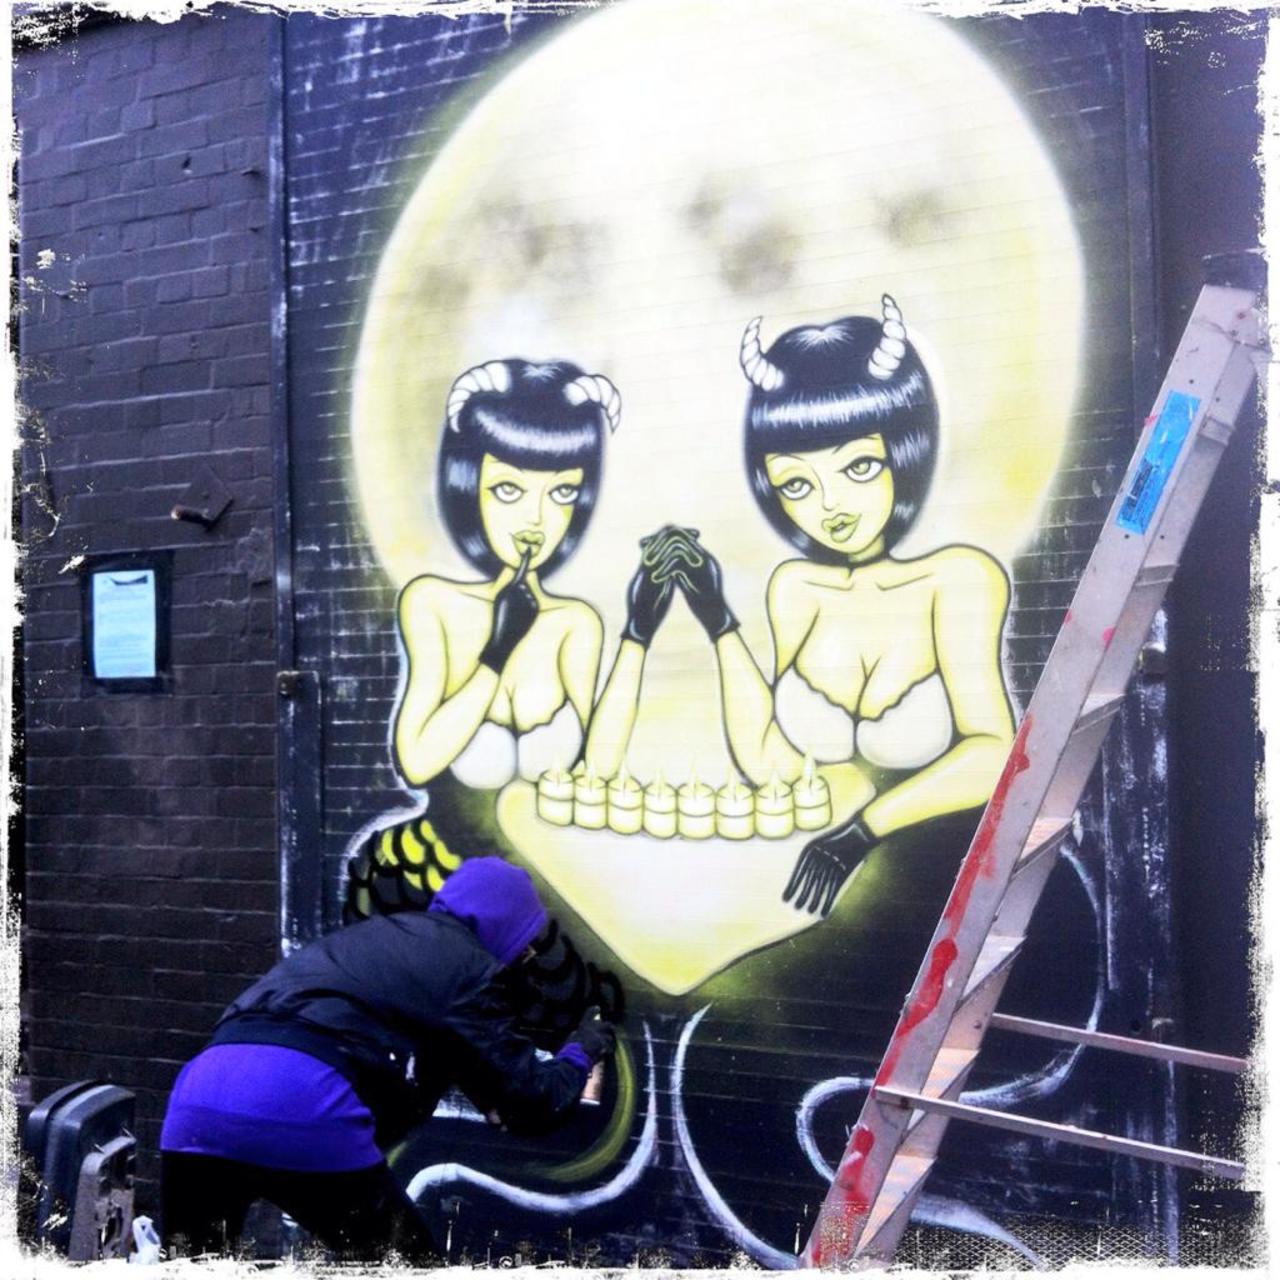 RT @BrickLaneArt: Something new from @sakiandbitches on Bacon Street #art #streetart #graffiti http://t.co/vixJKyzVLN